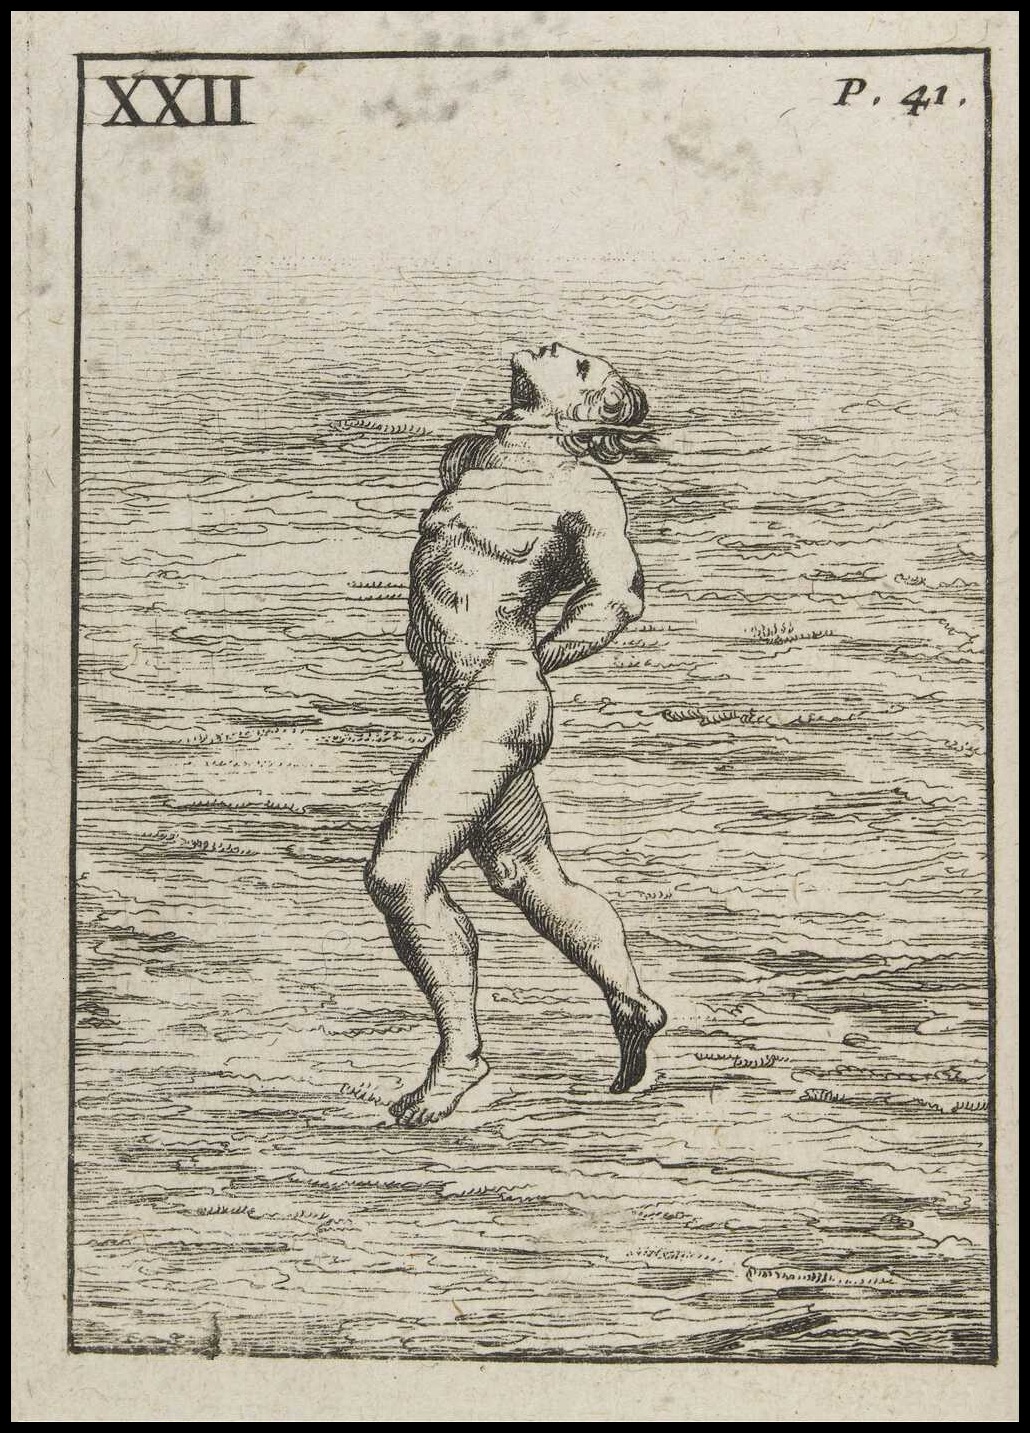 engraved swimmer illustration